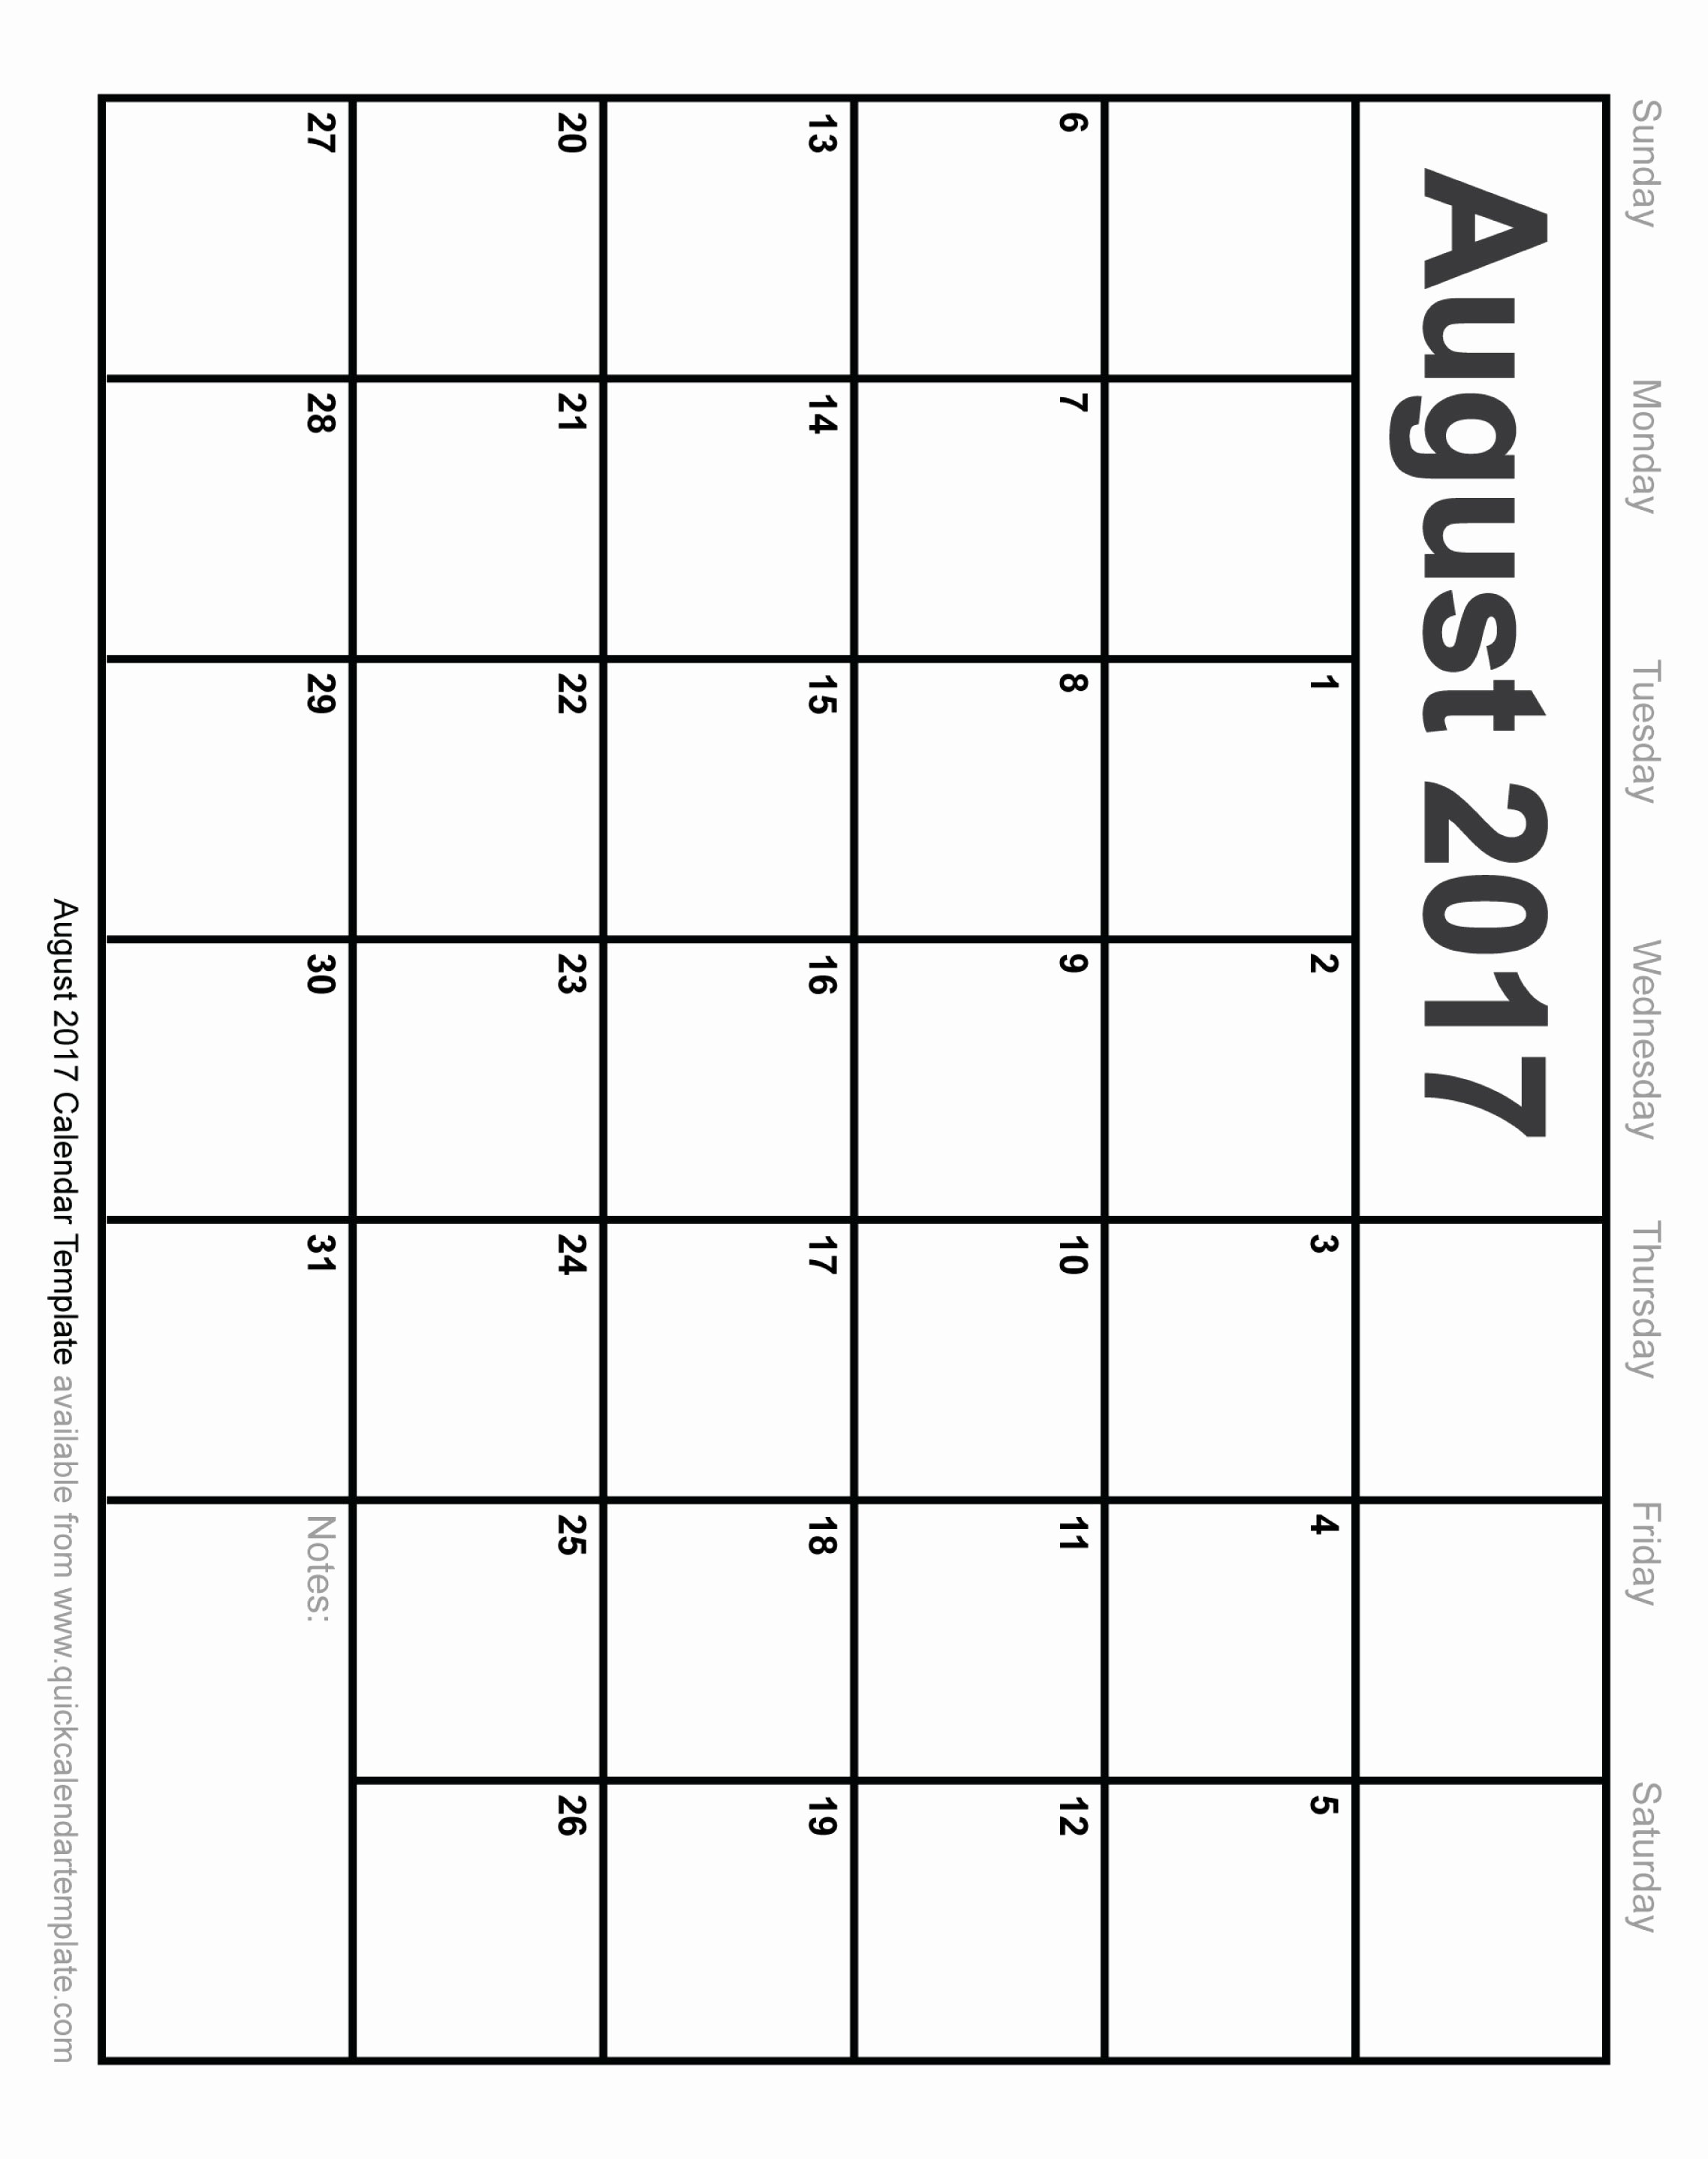 August 2017 Calendar Excel